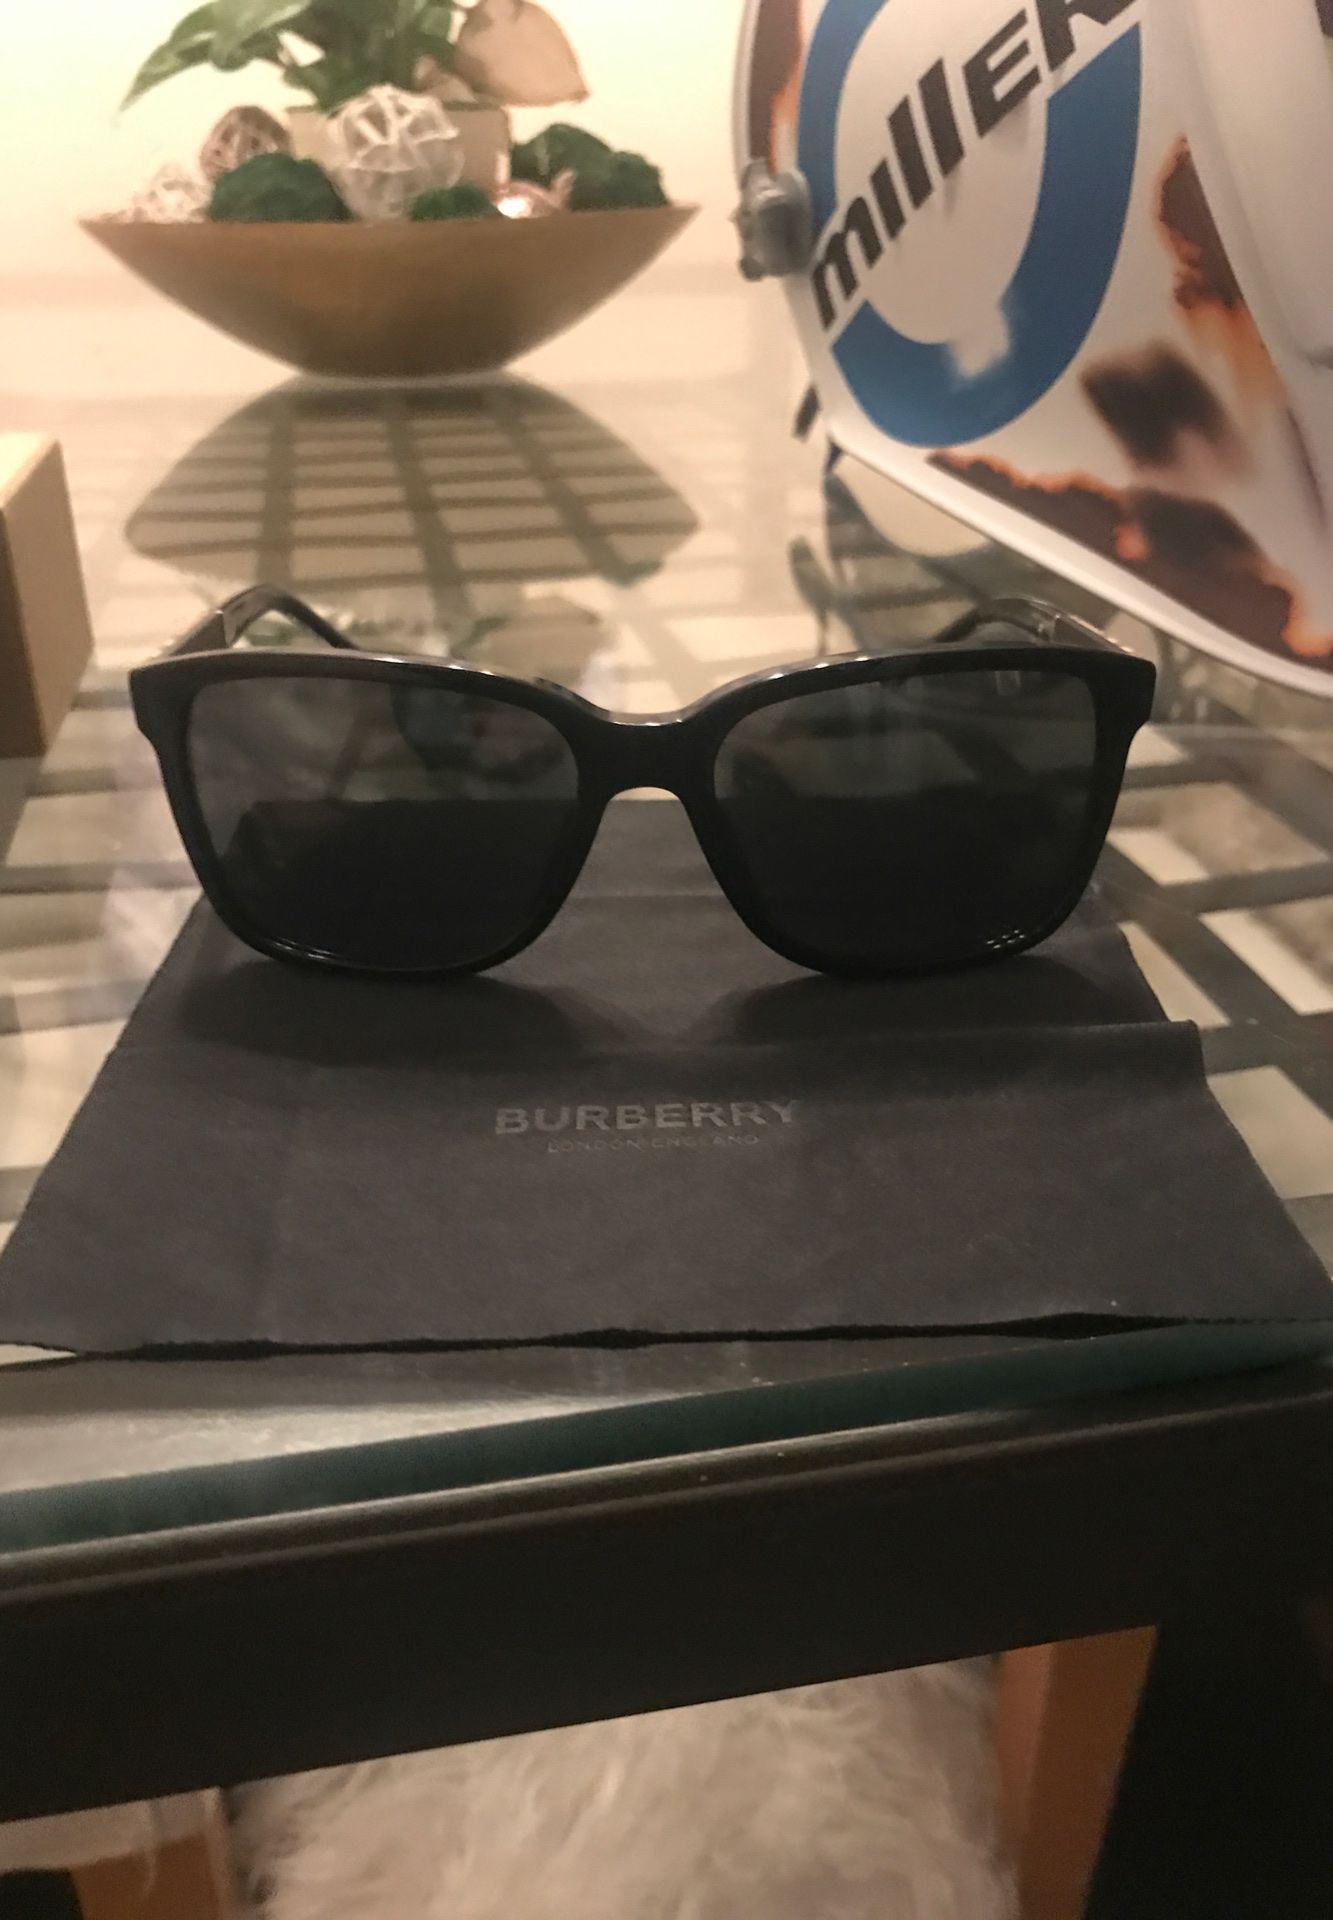 Burberry men sunglasses